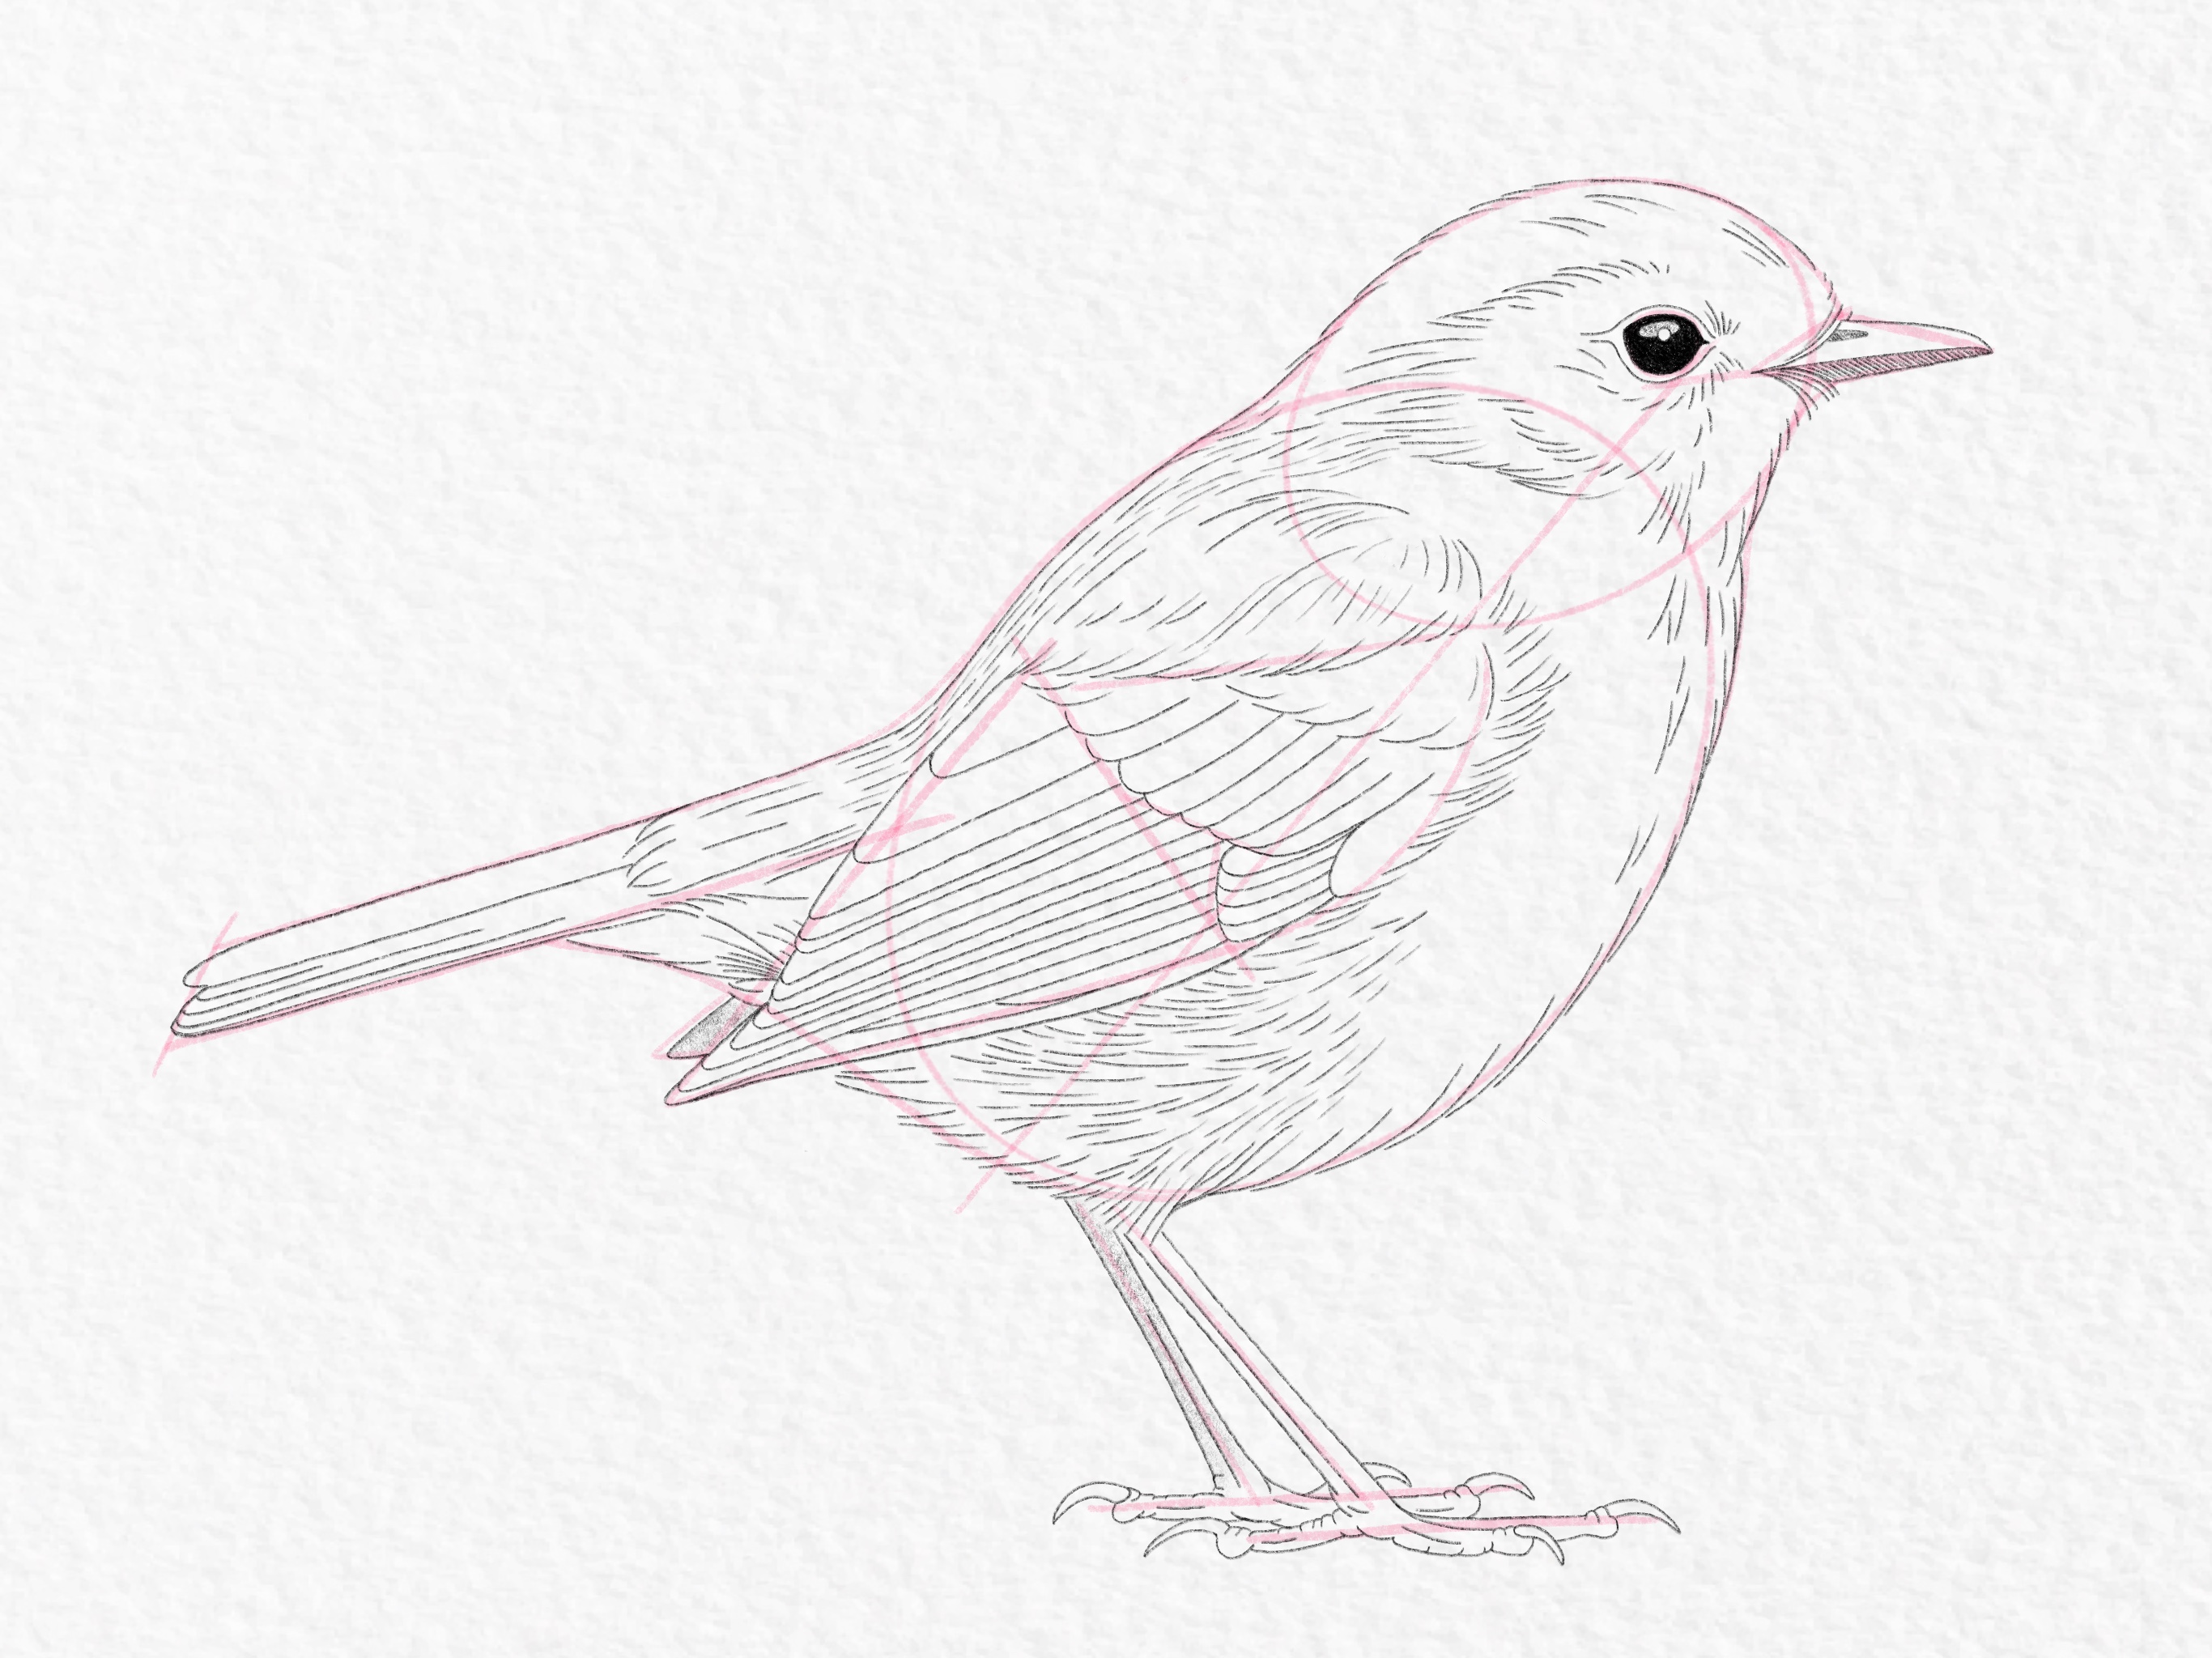 Bird study pencil colour by lazyqueen24 on DeviantArt